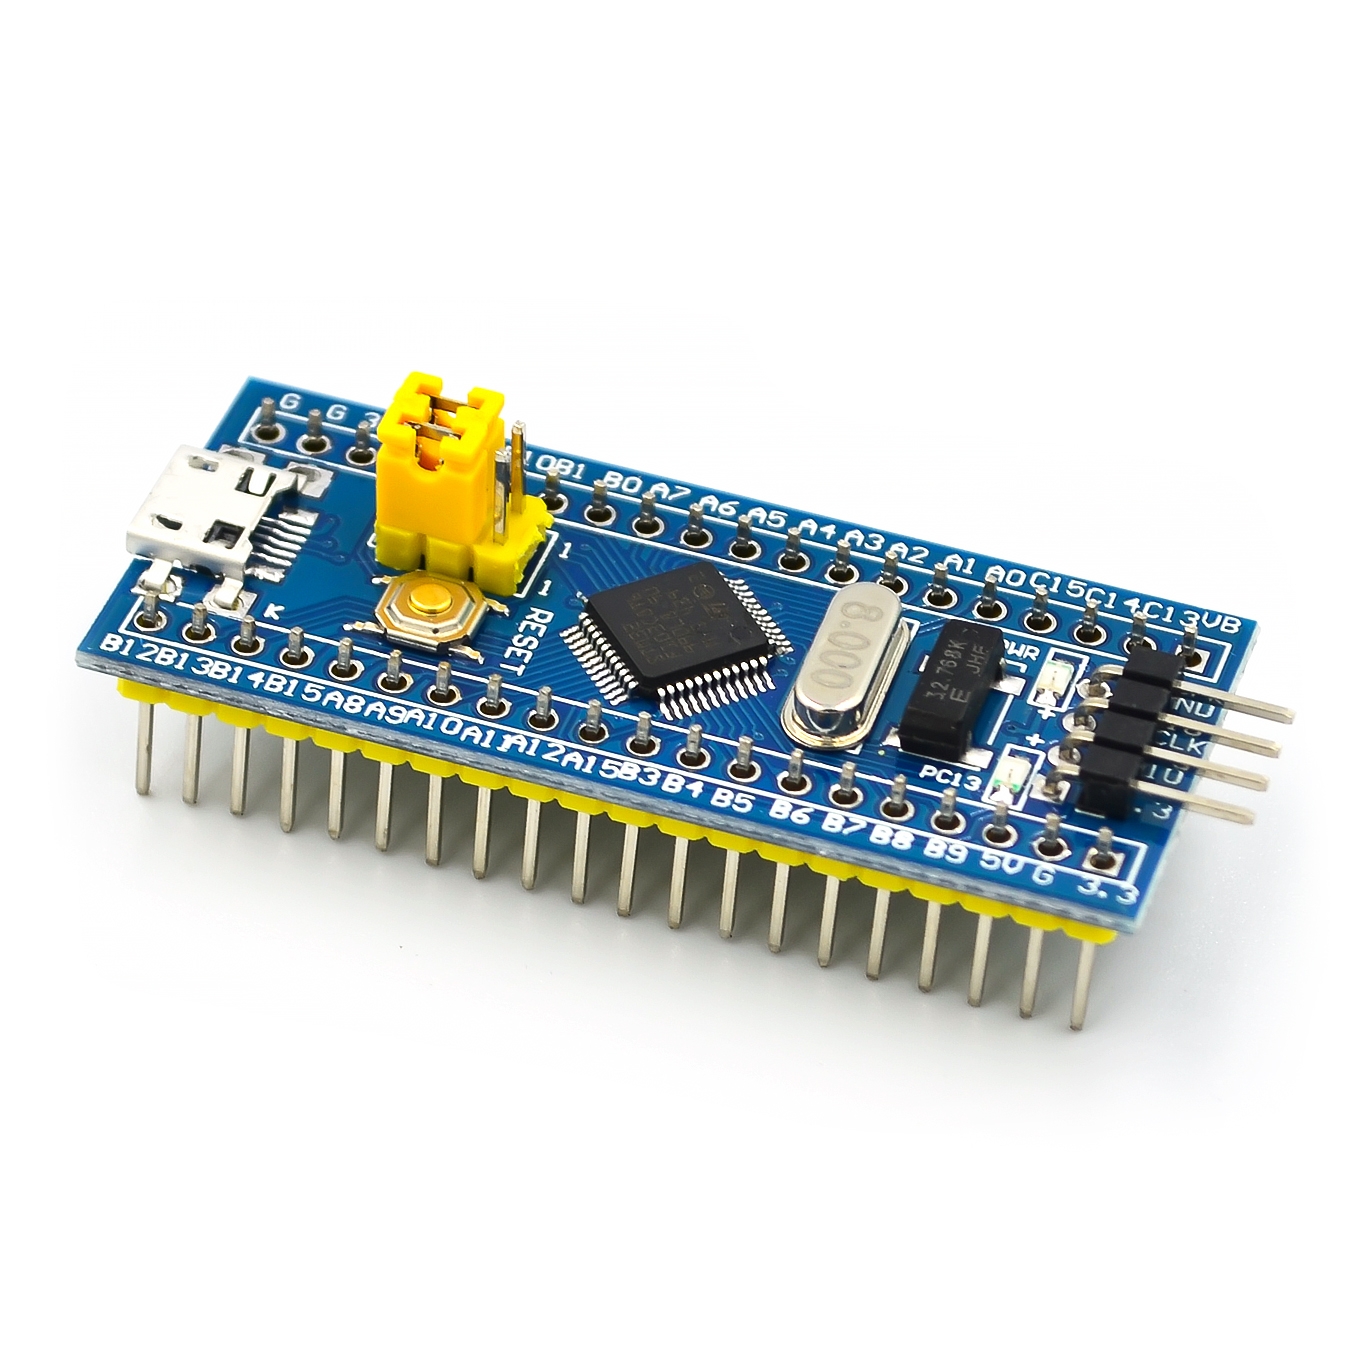  Контроллер STM32F103C8T6  для Arduino ардуино